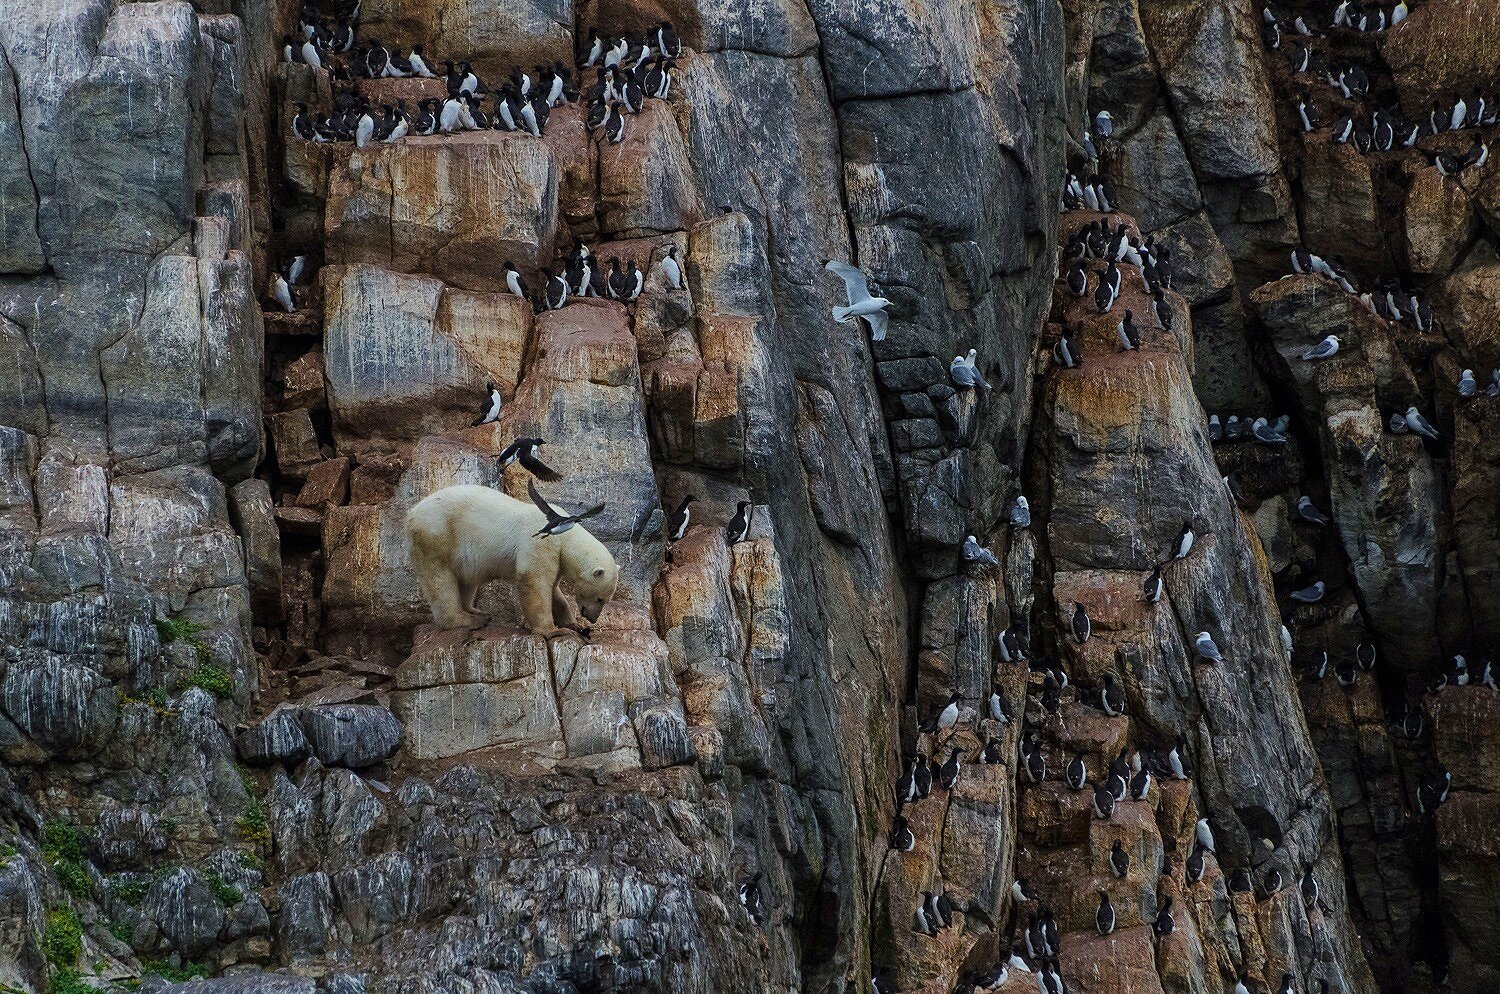 Stranded Polar Bear Surviving on Seabirds Until Ice Forms